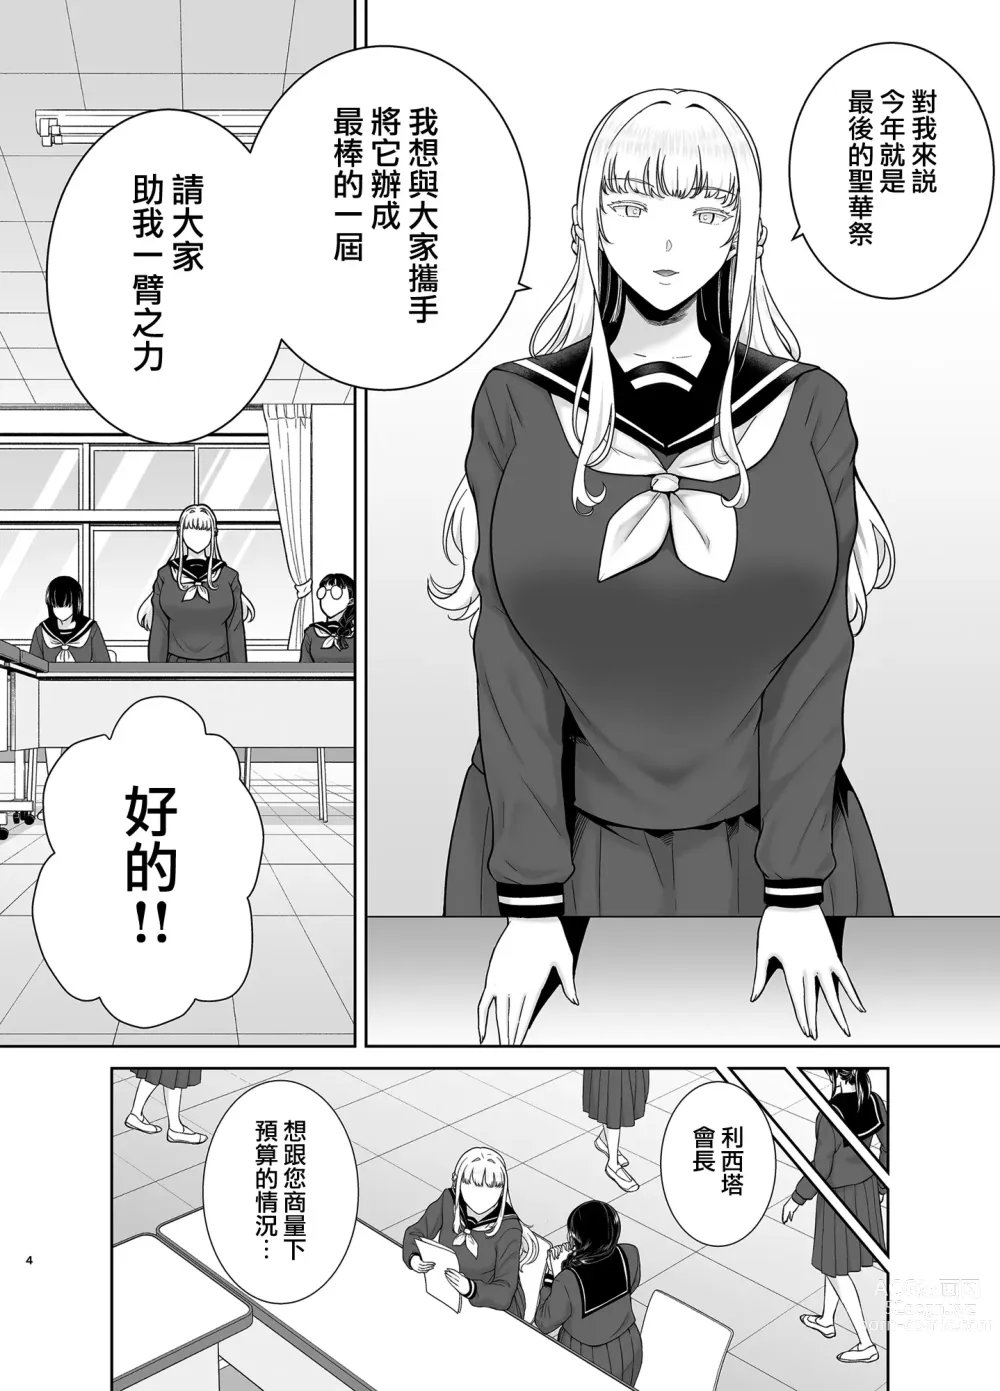 Page 4 of manga 聖華女学院公認竿おじさん7